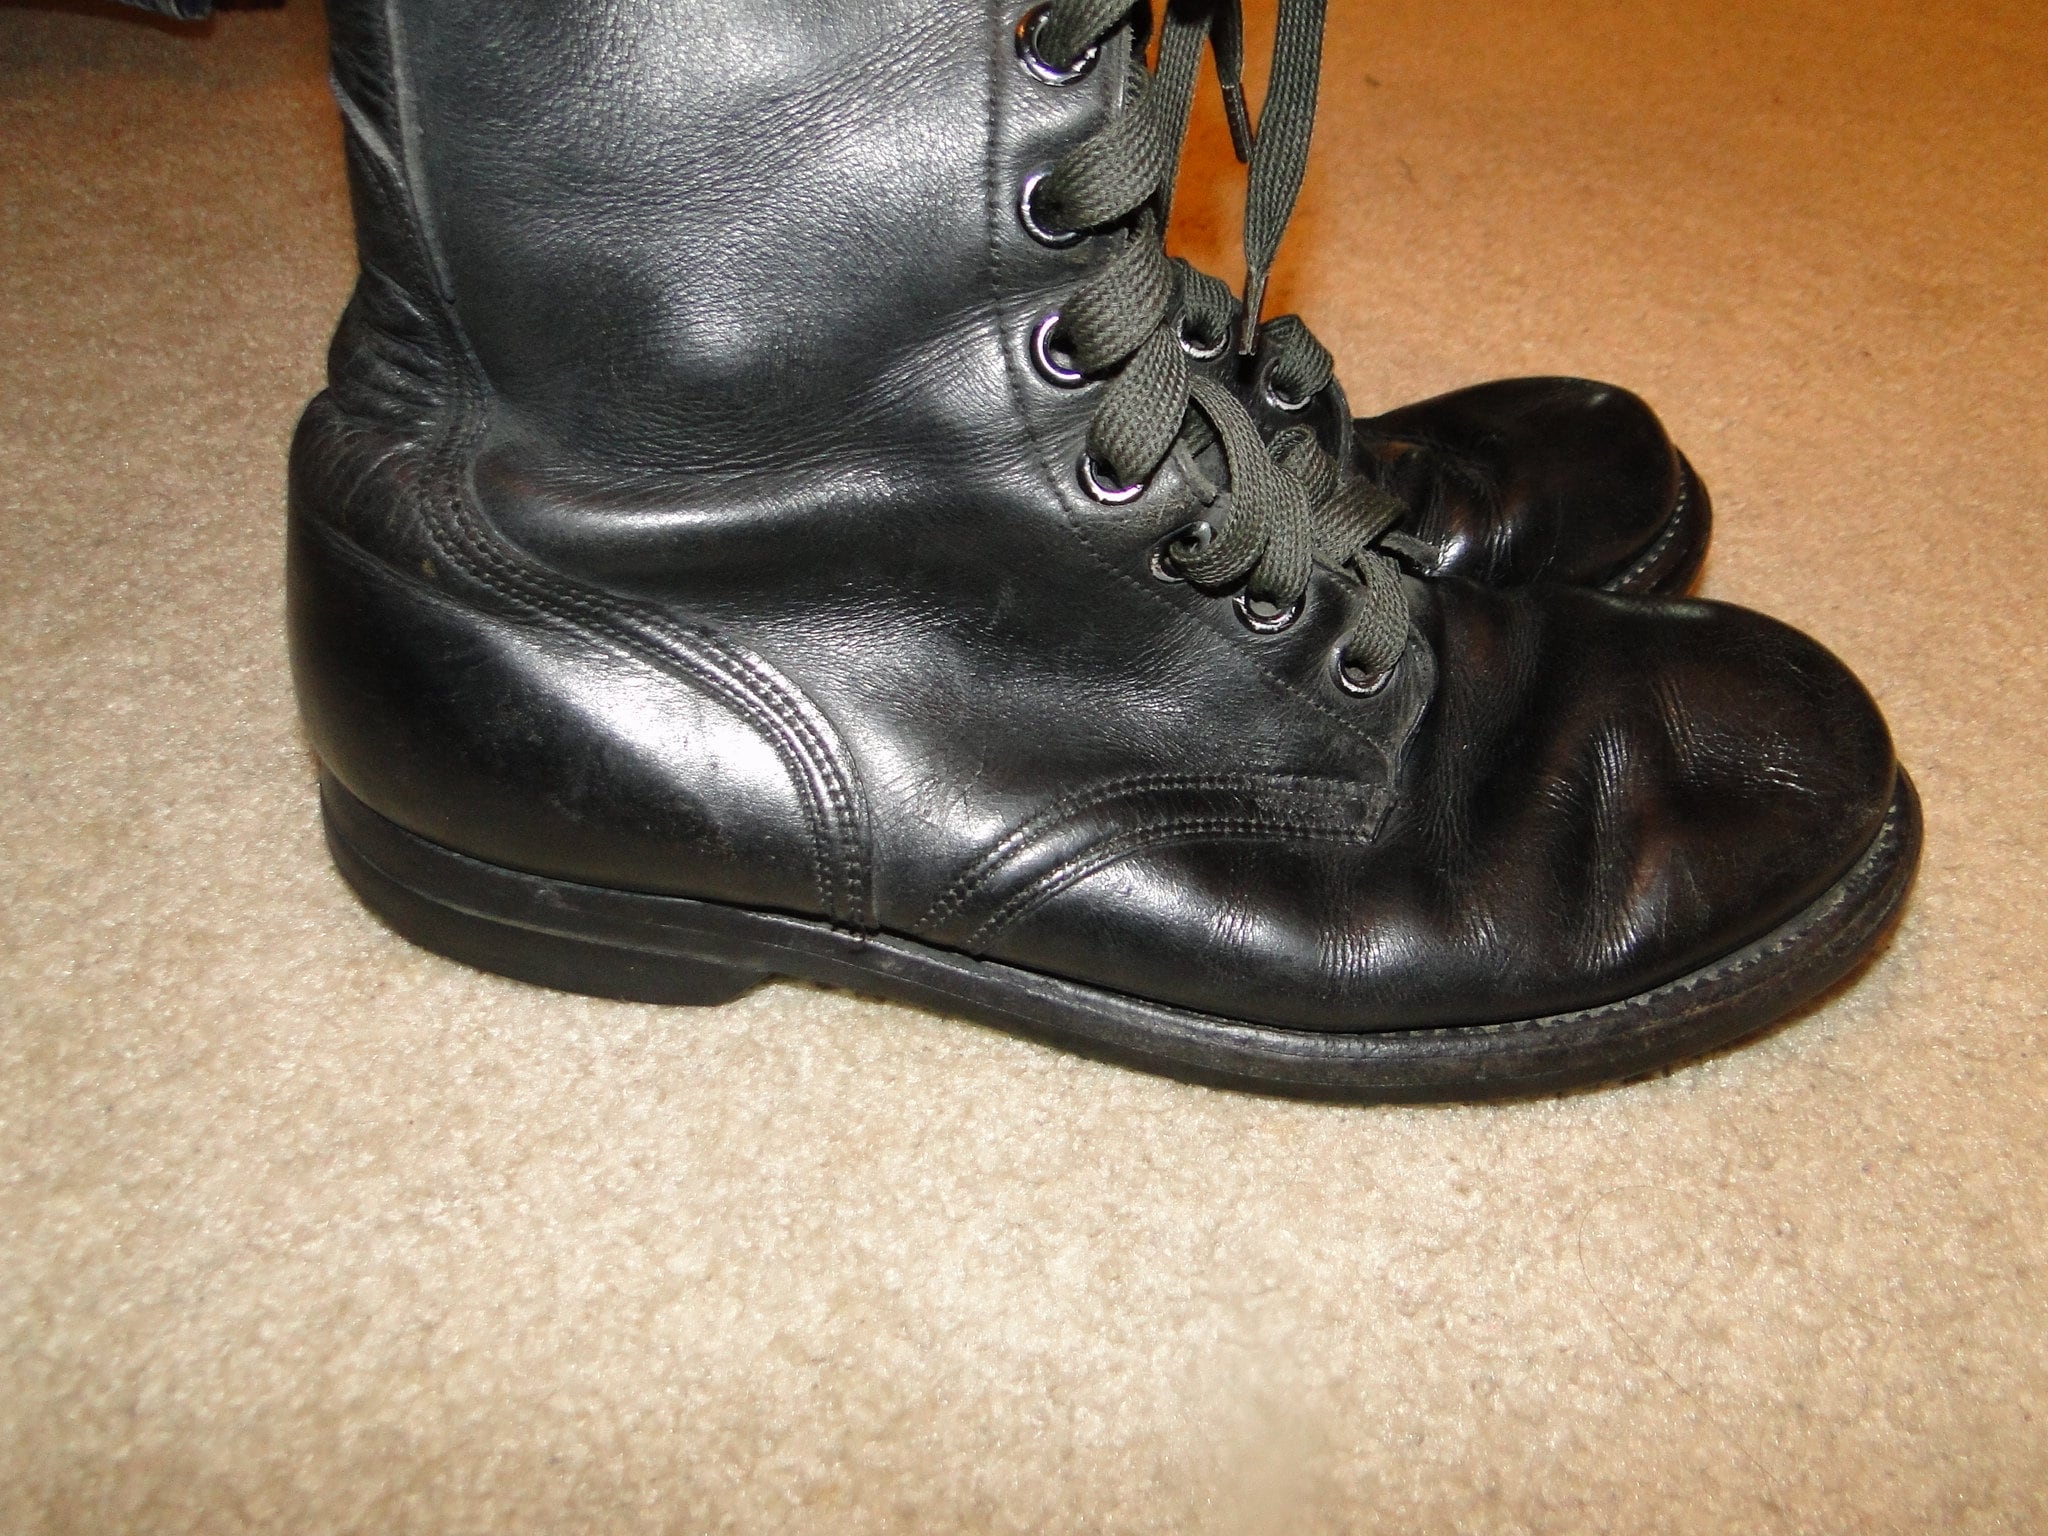 Vintage combat boots black Endicott Johnson 60s or earlier re-soled ...